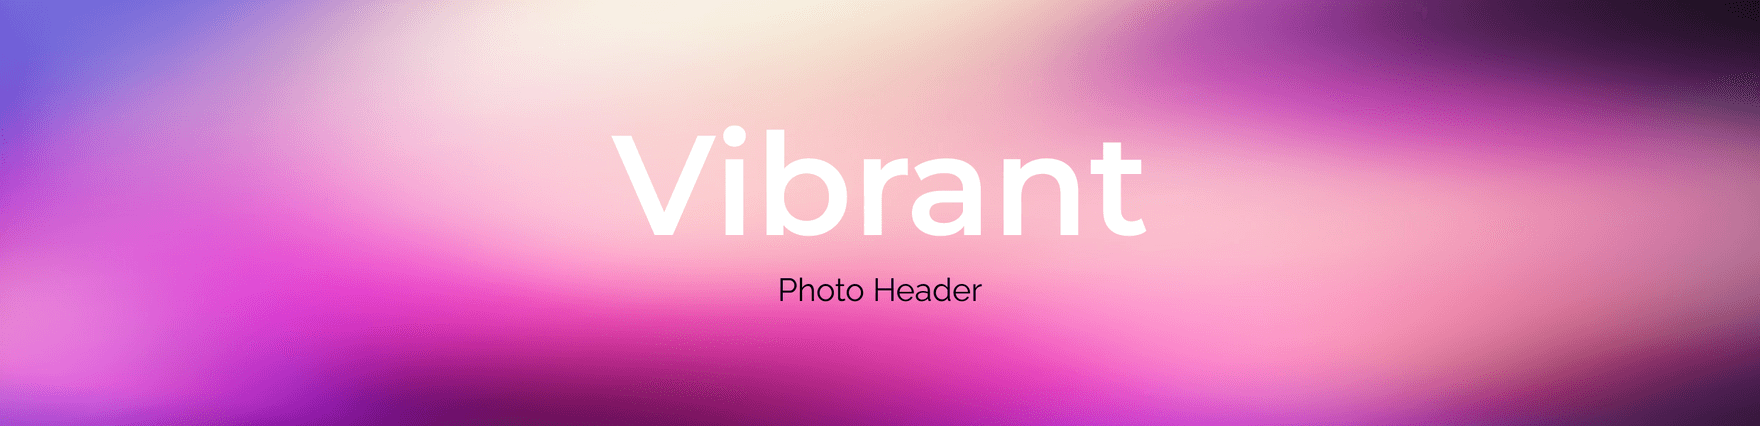 Free Vibrant Photo Header Template